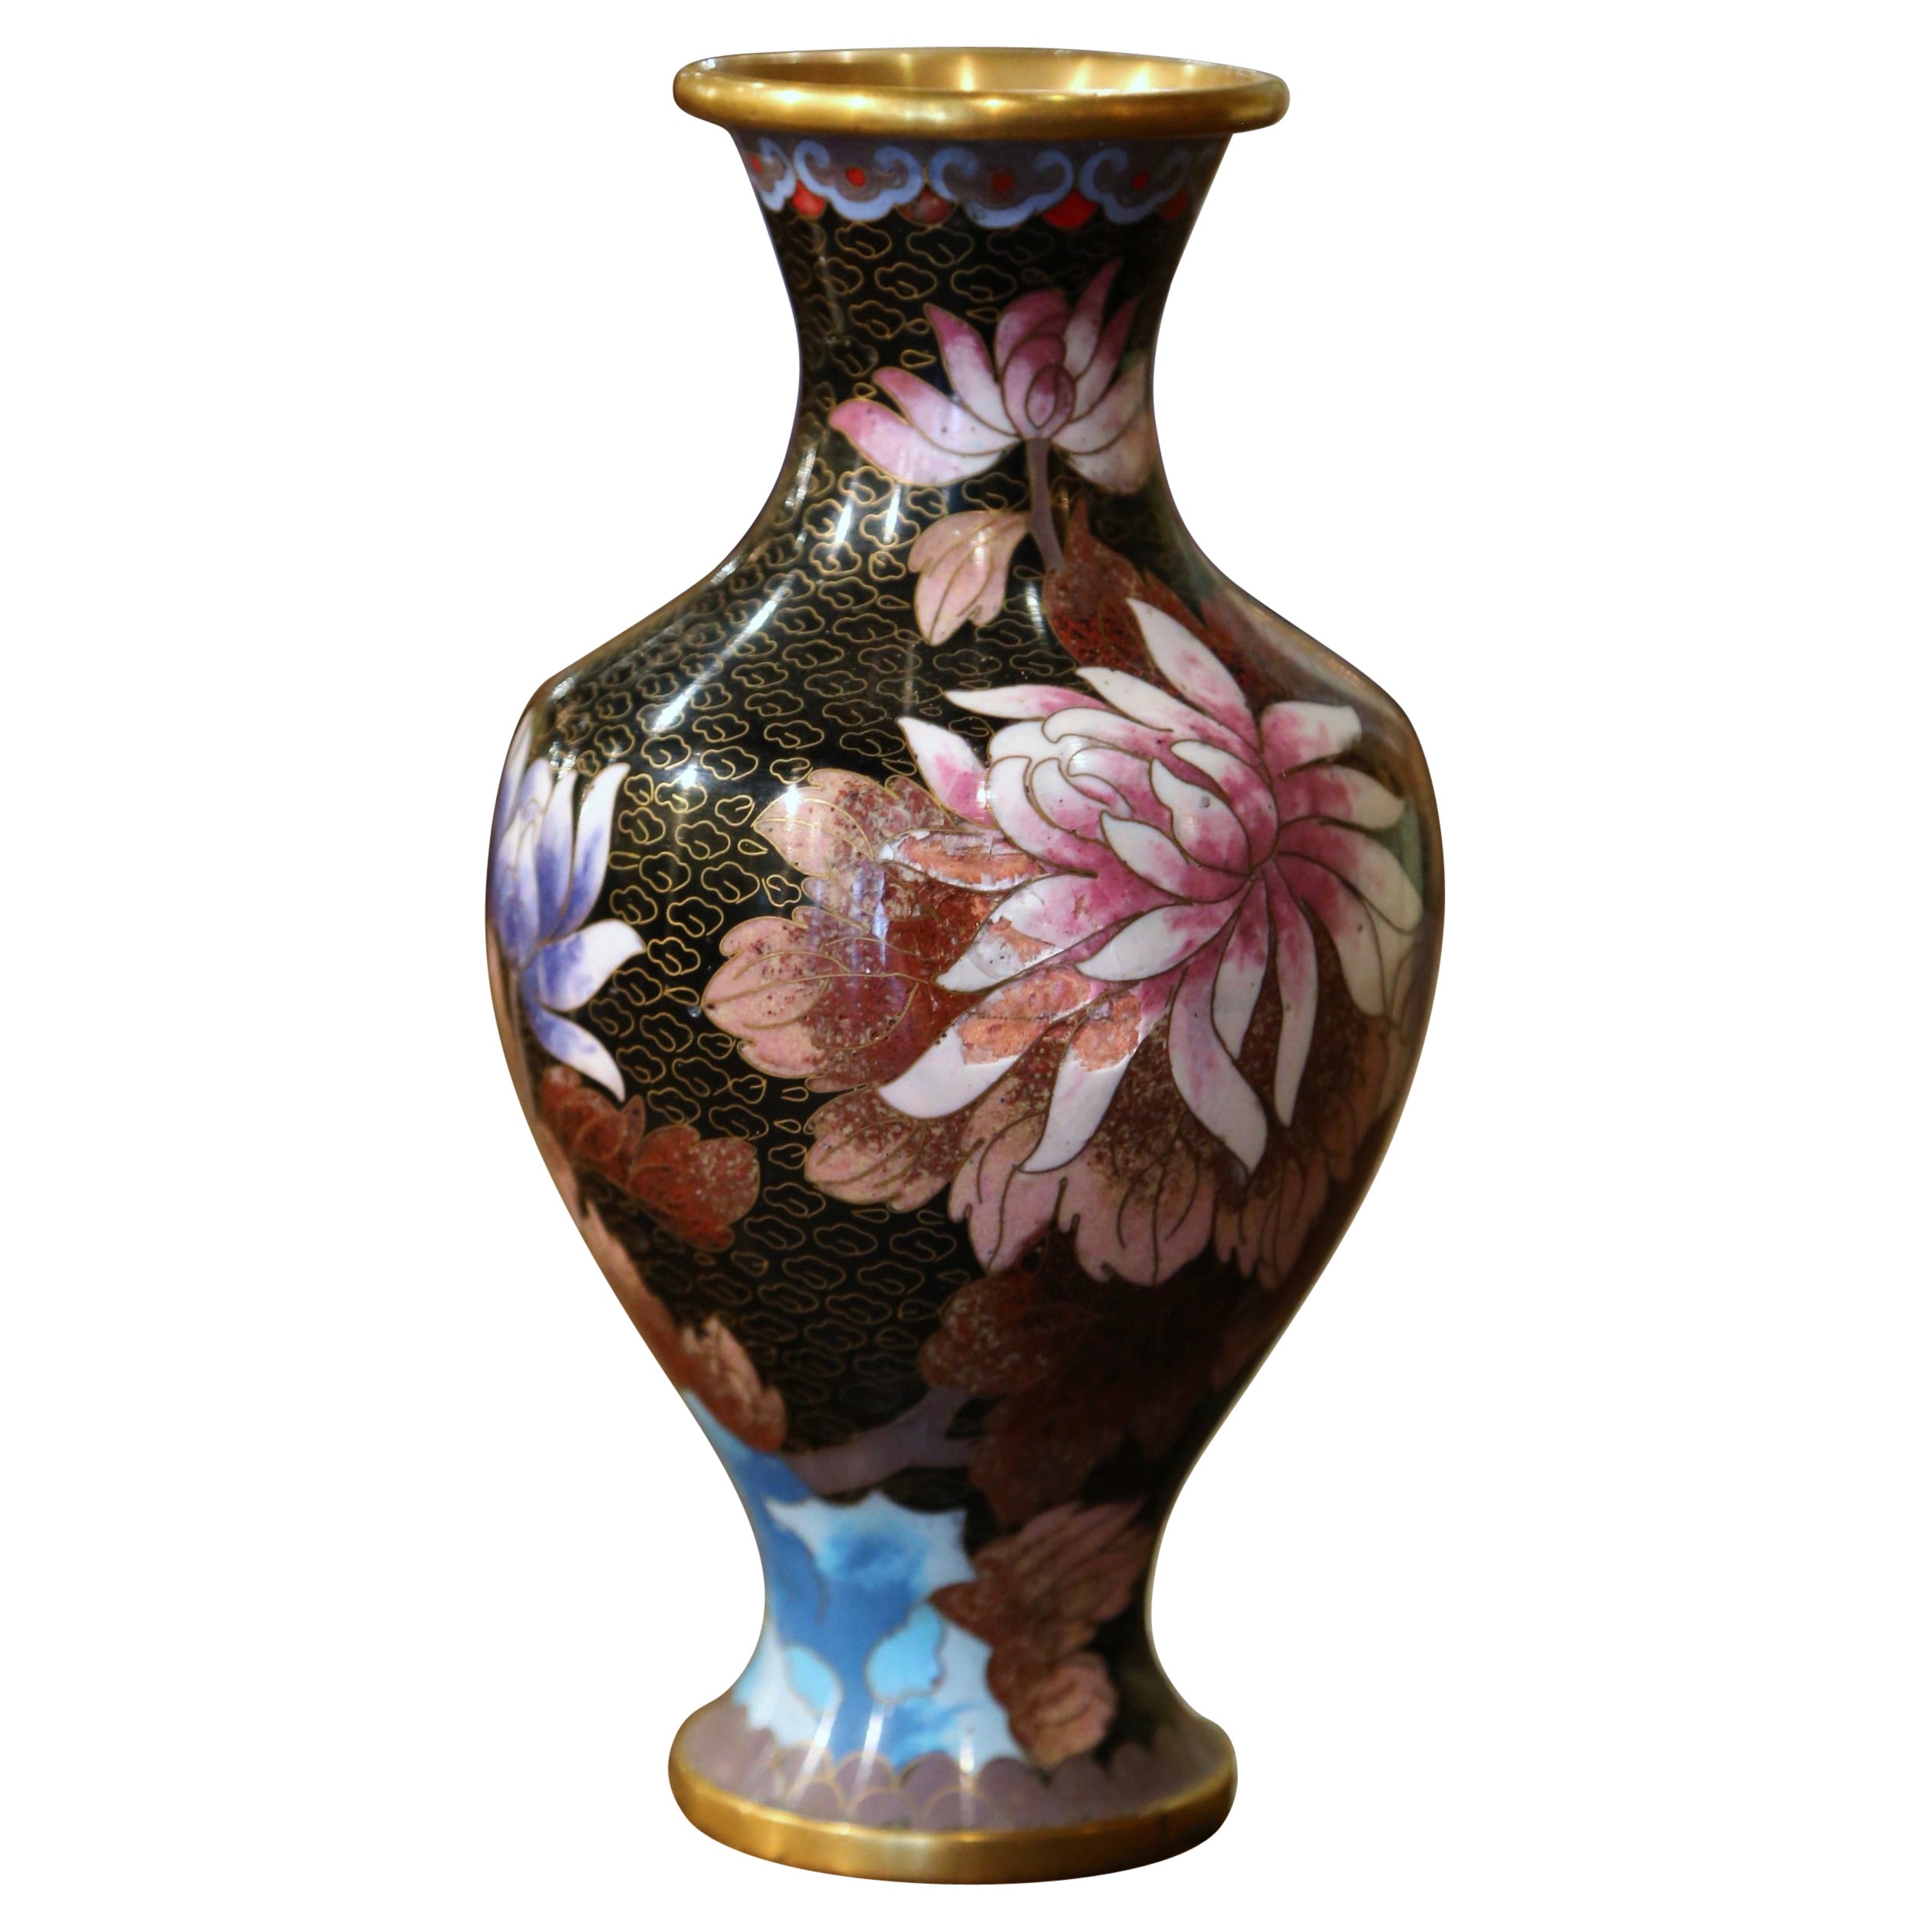  Vintage Chinese Cloisonne Enamel Vase with Floral and Leaf Motifs  For Sale